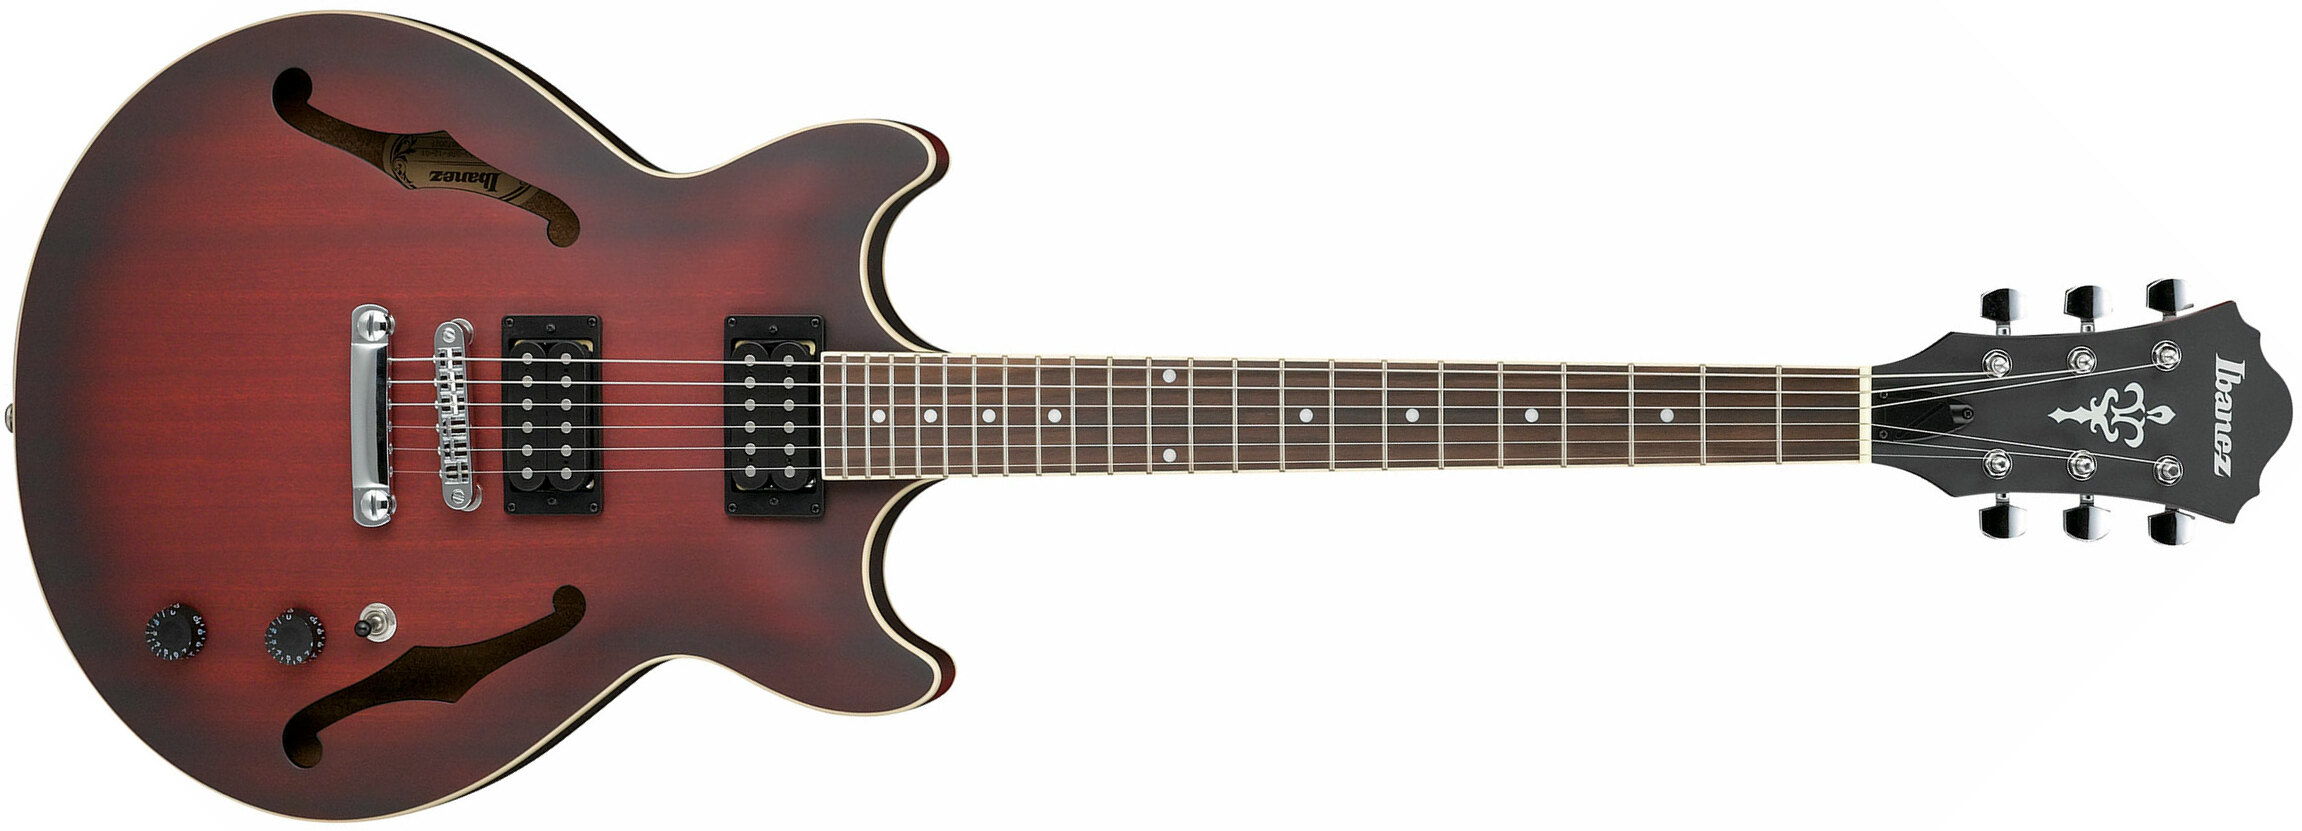 Ibanez Am53 Srf Artcore Hh Ht Wal - Sunburst Red Flat - Semi hollow elektriche gitaar - Main picture